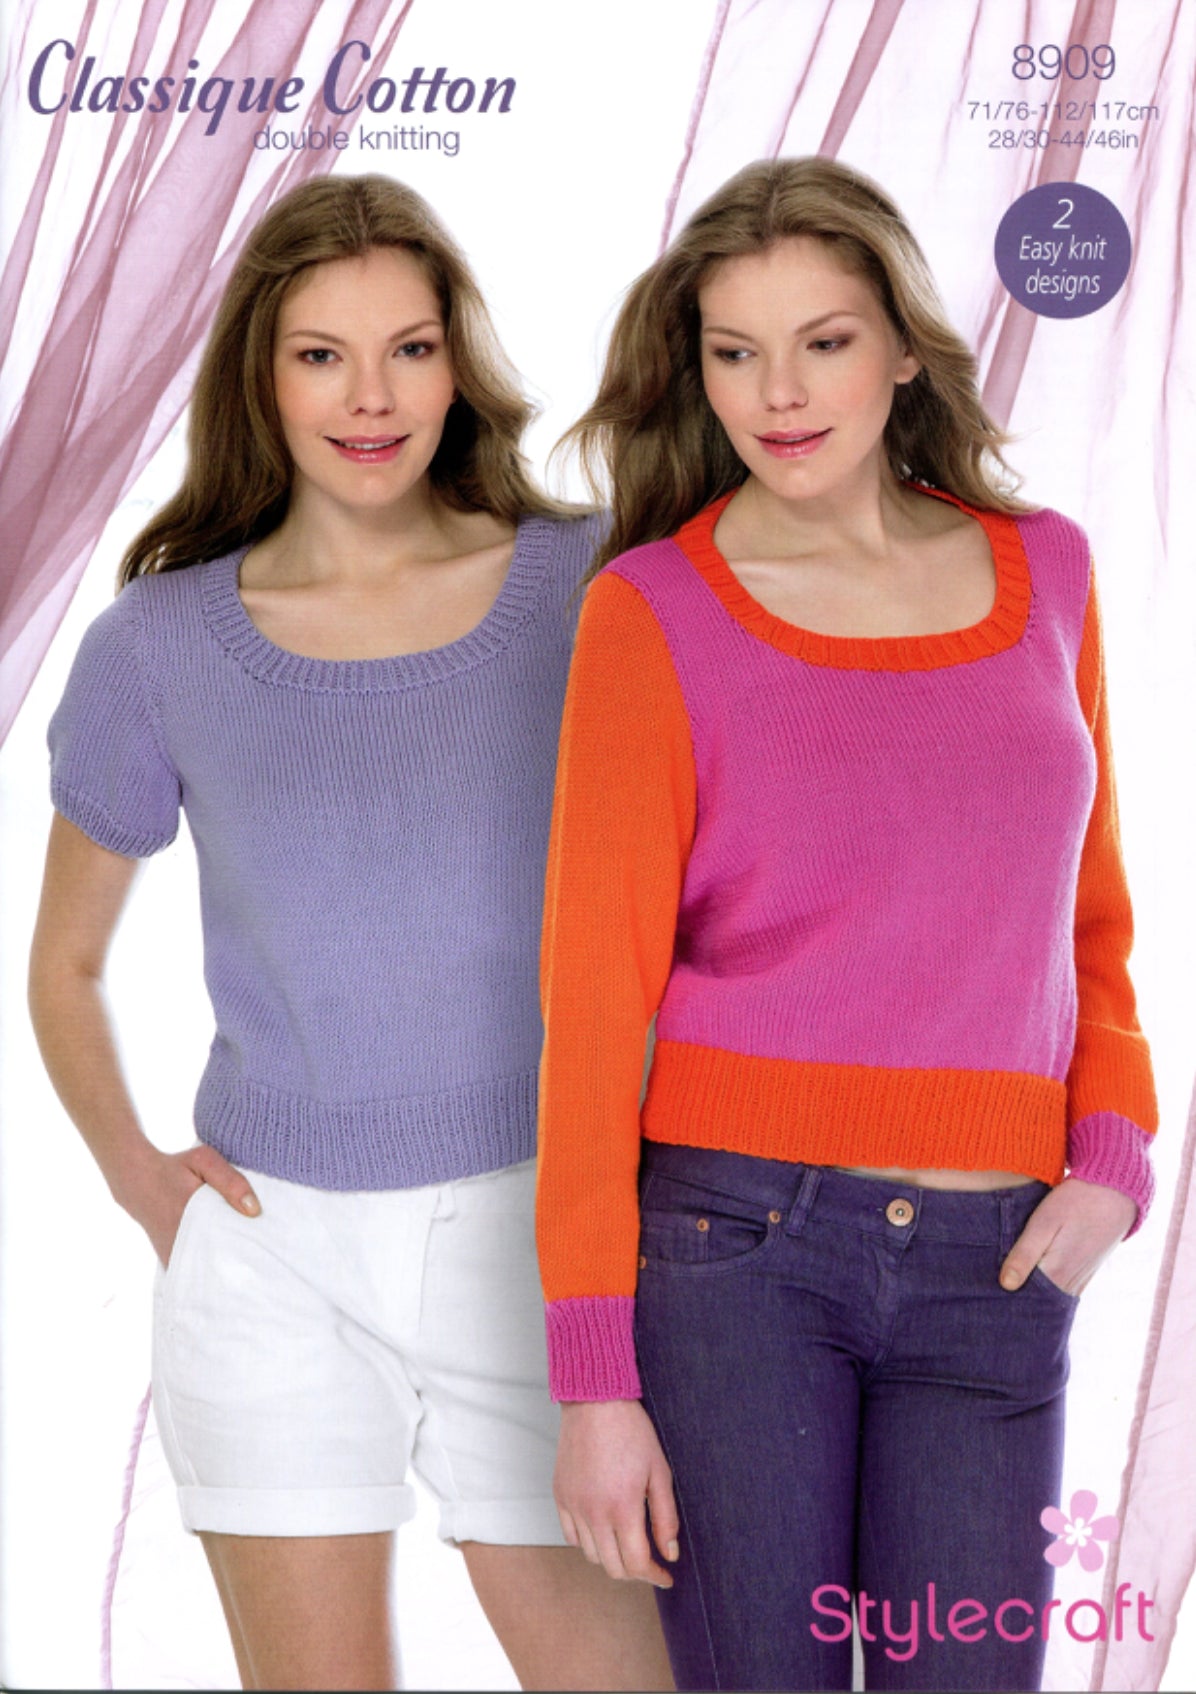 Stylecraft 8909 Classique Cotton Ladies Sweater